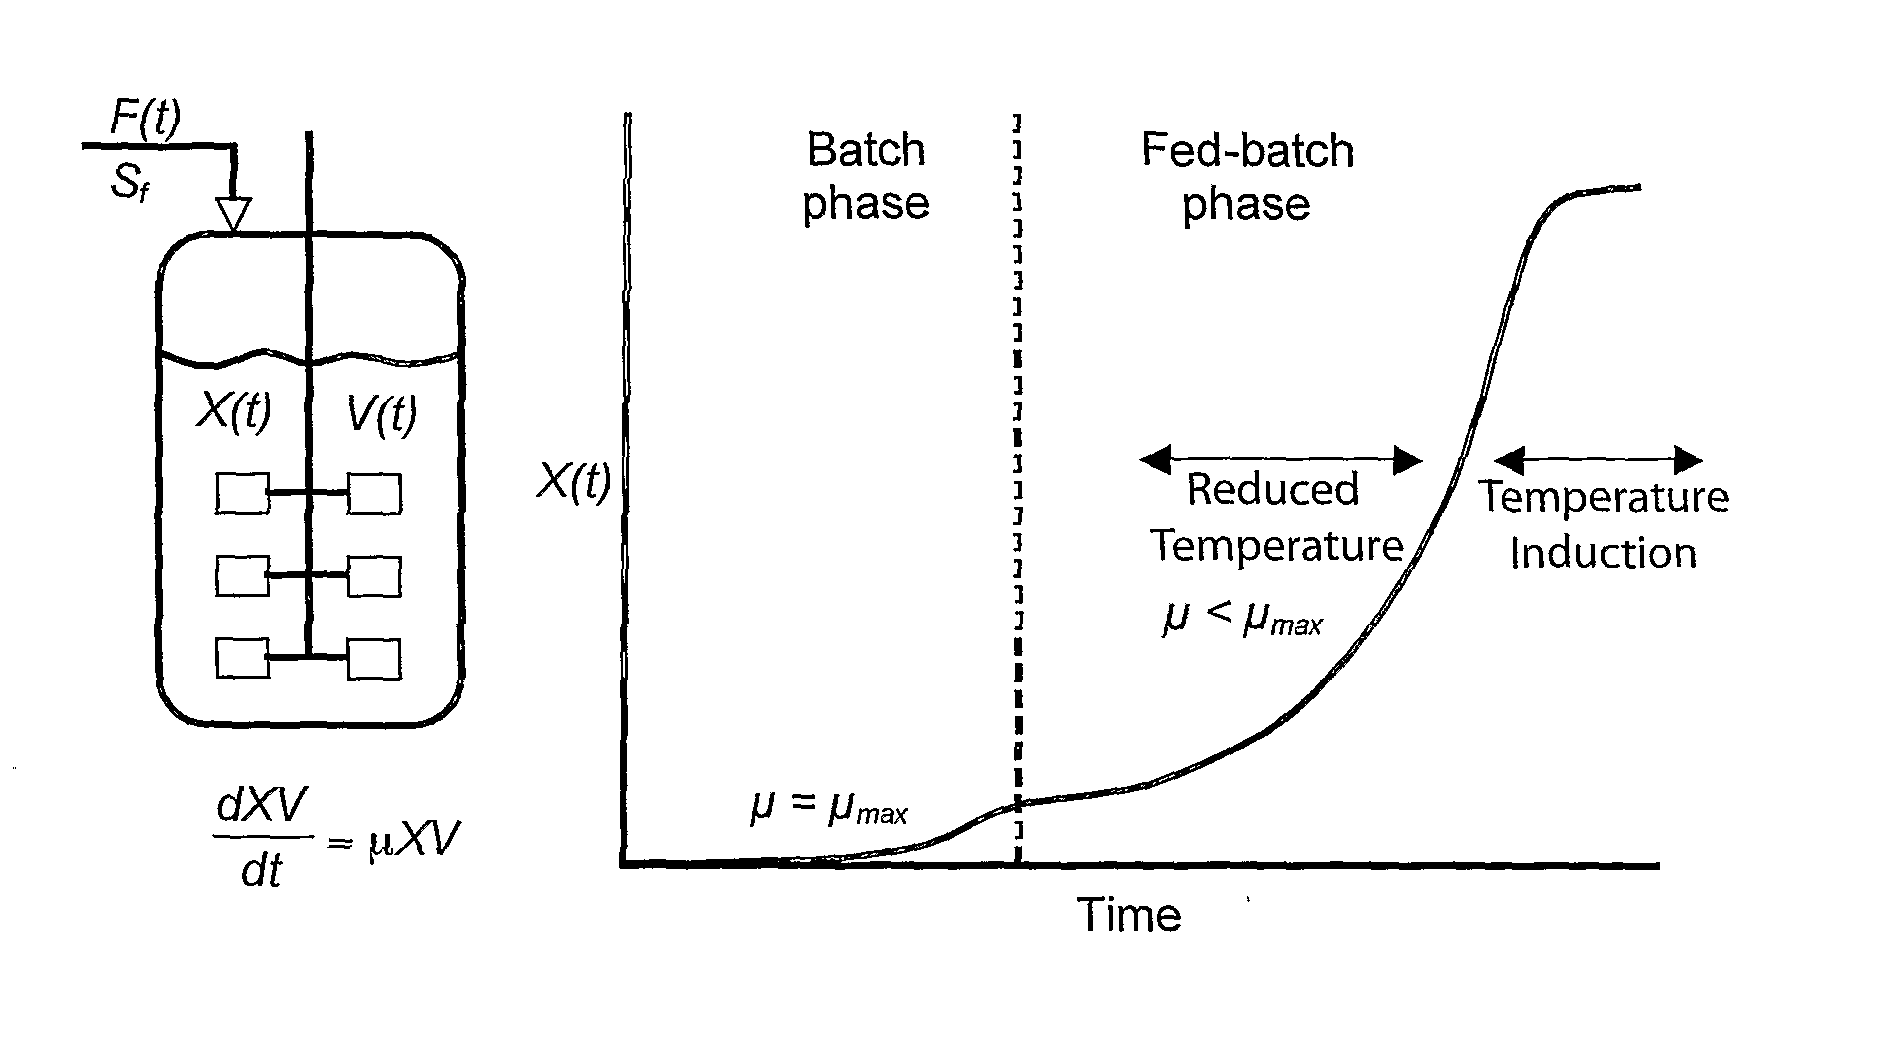 Process for Plasmid Dna Fermentation